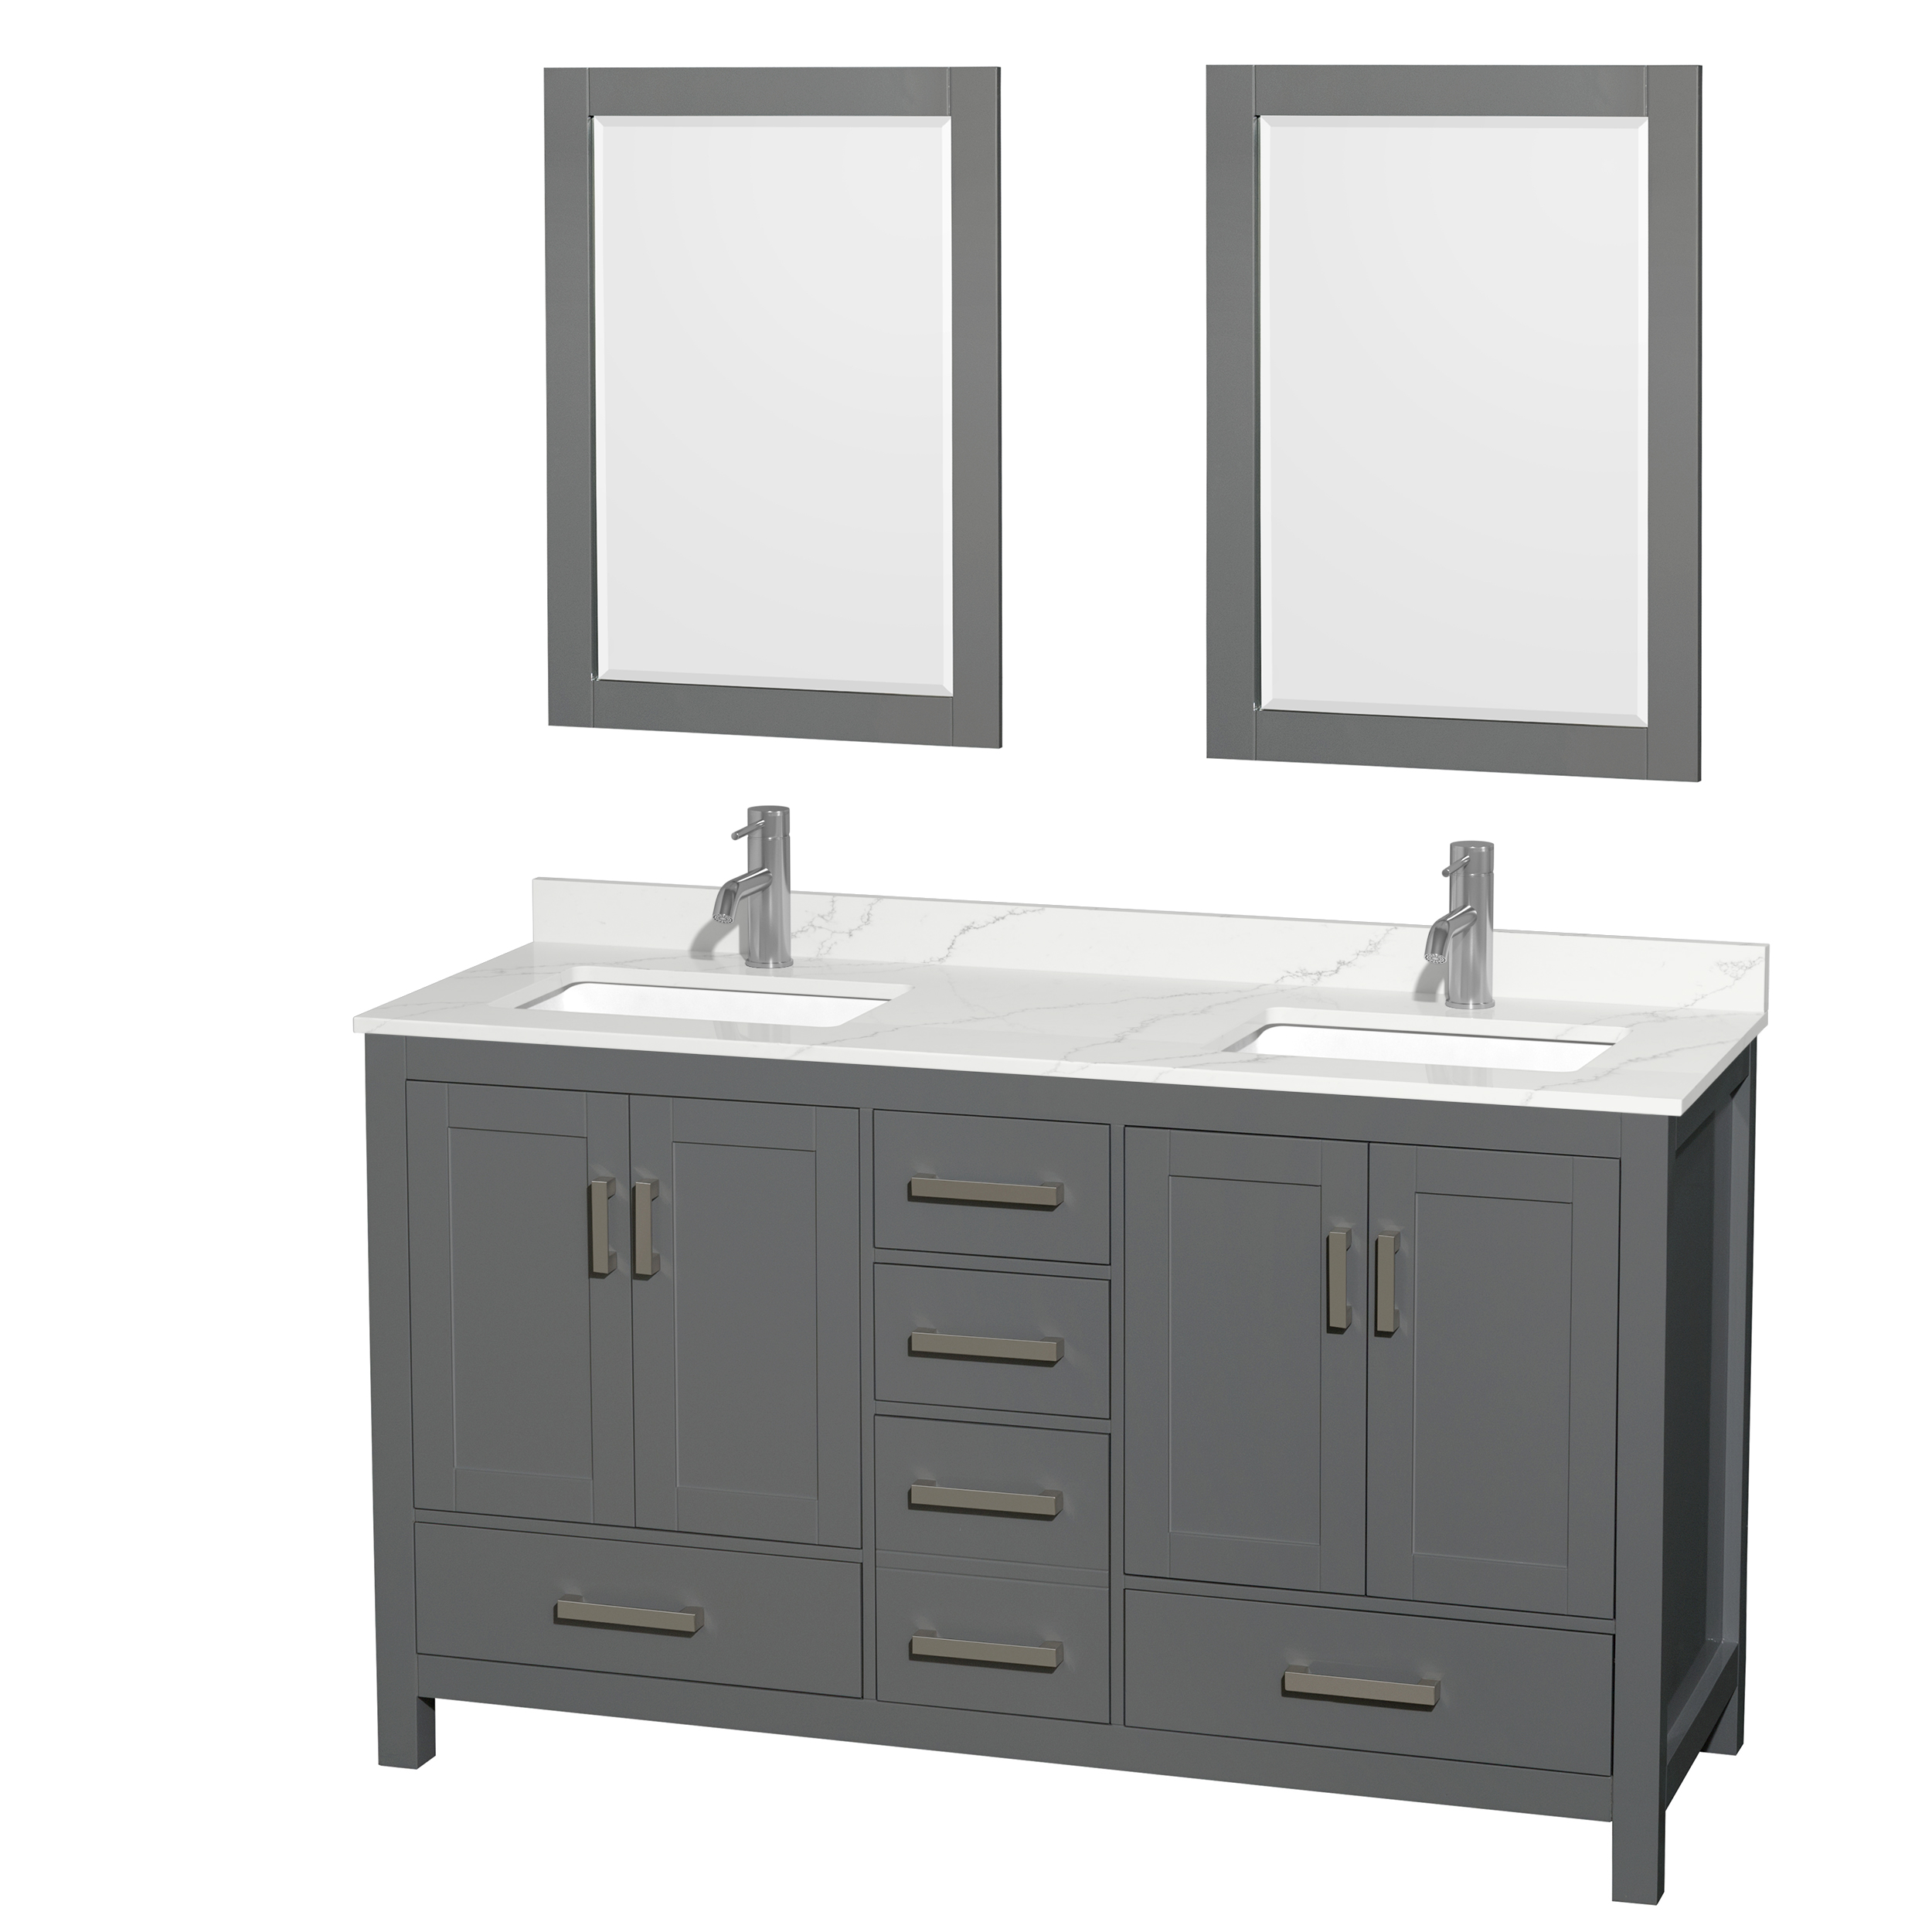 sheffield 60" double bathroom vanity by wyndham collection - dark gray